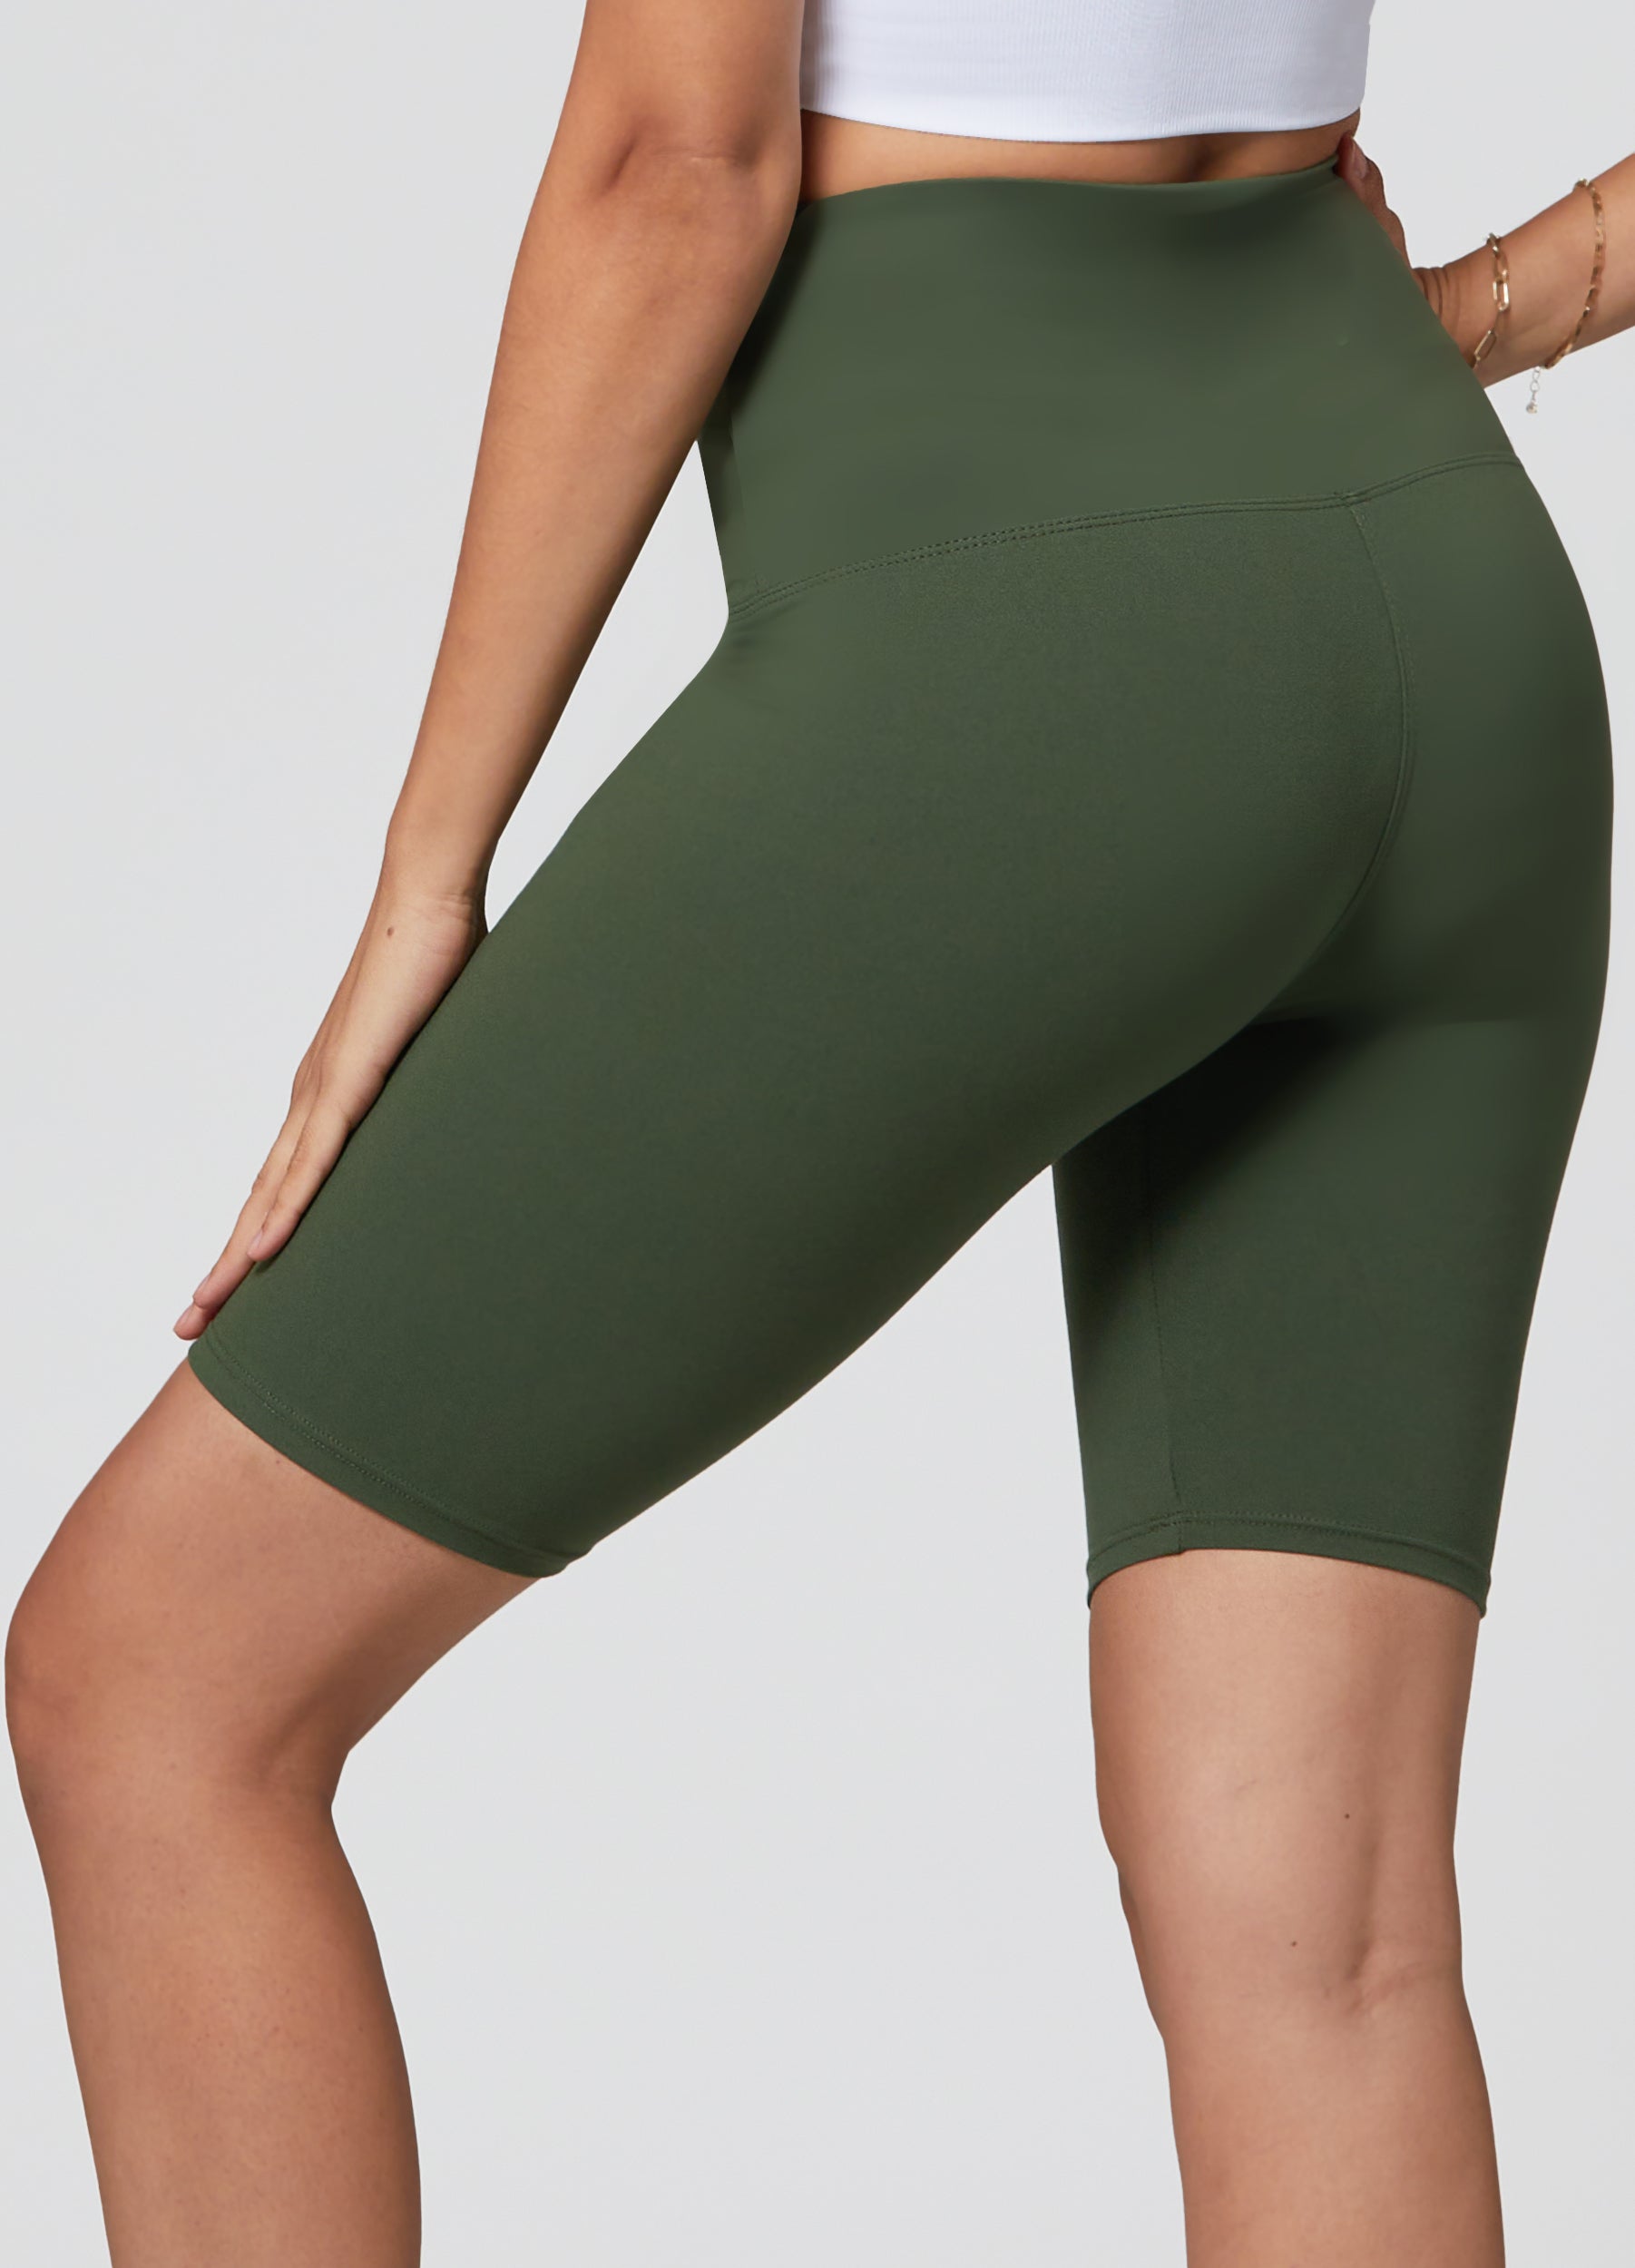 Pgeraug Yoga Pants Bike Yoga Elastic High Waist Shorts Leggings Sports  Pants for Women Army Green S 